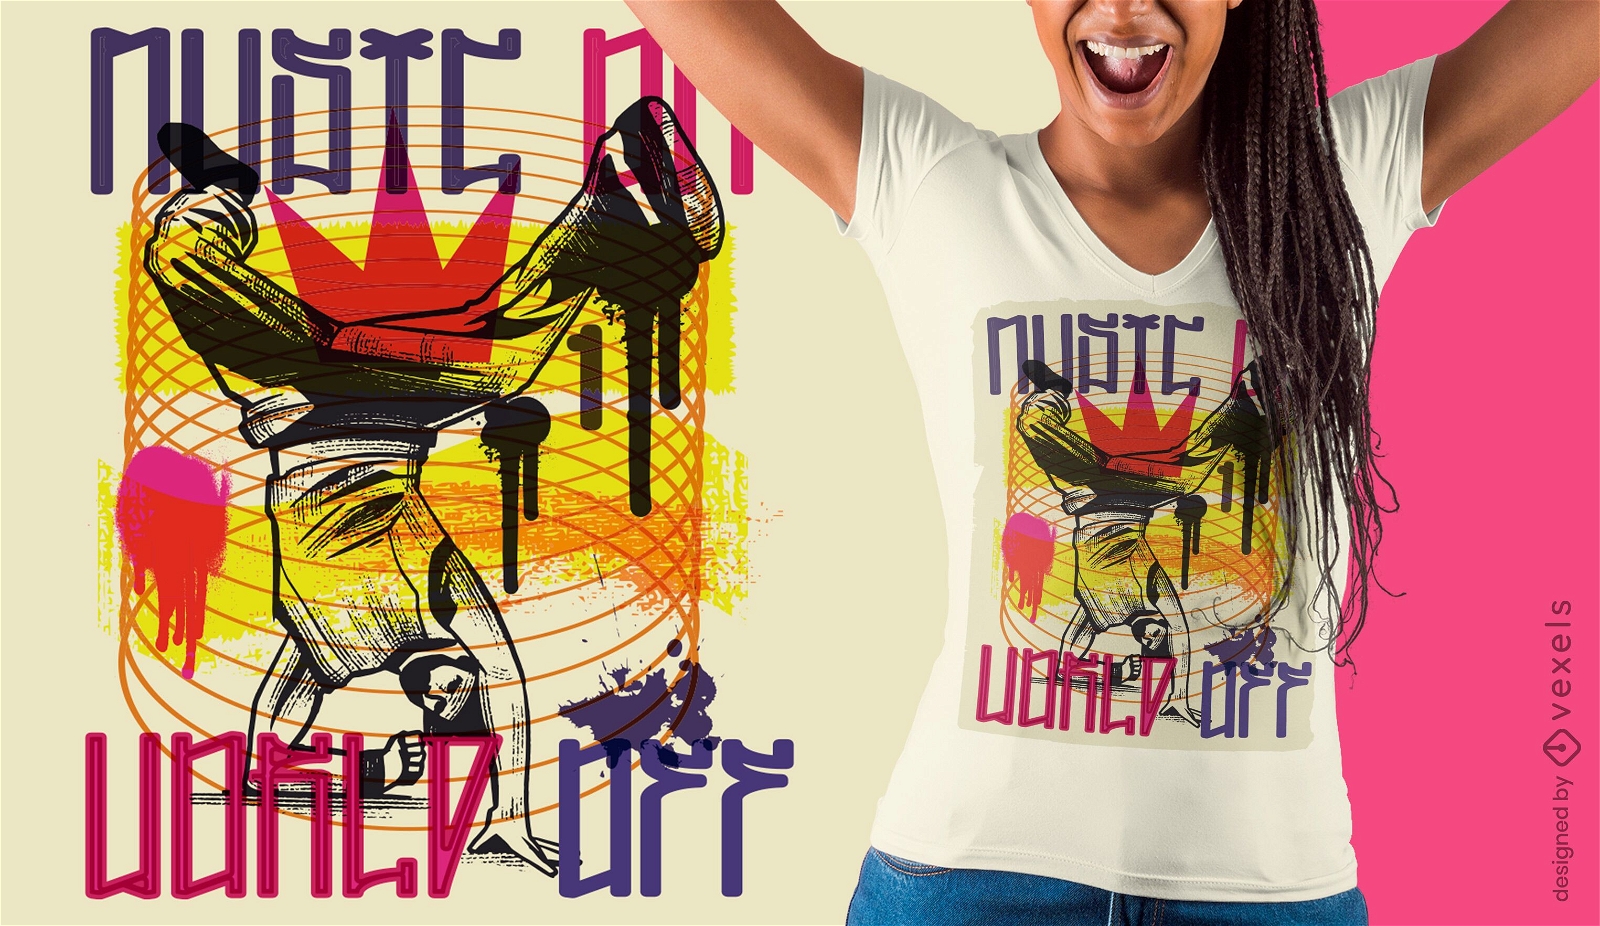 Breakdancer urban graffiti t-shirt design